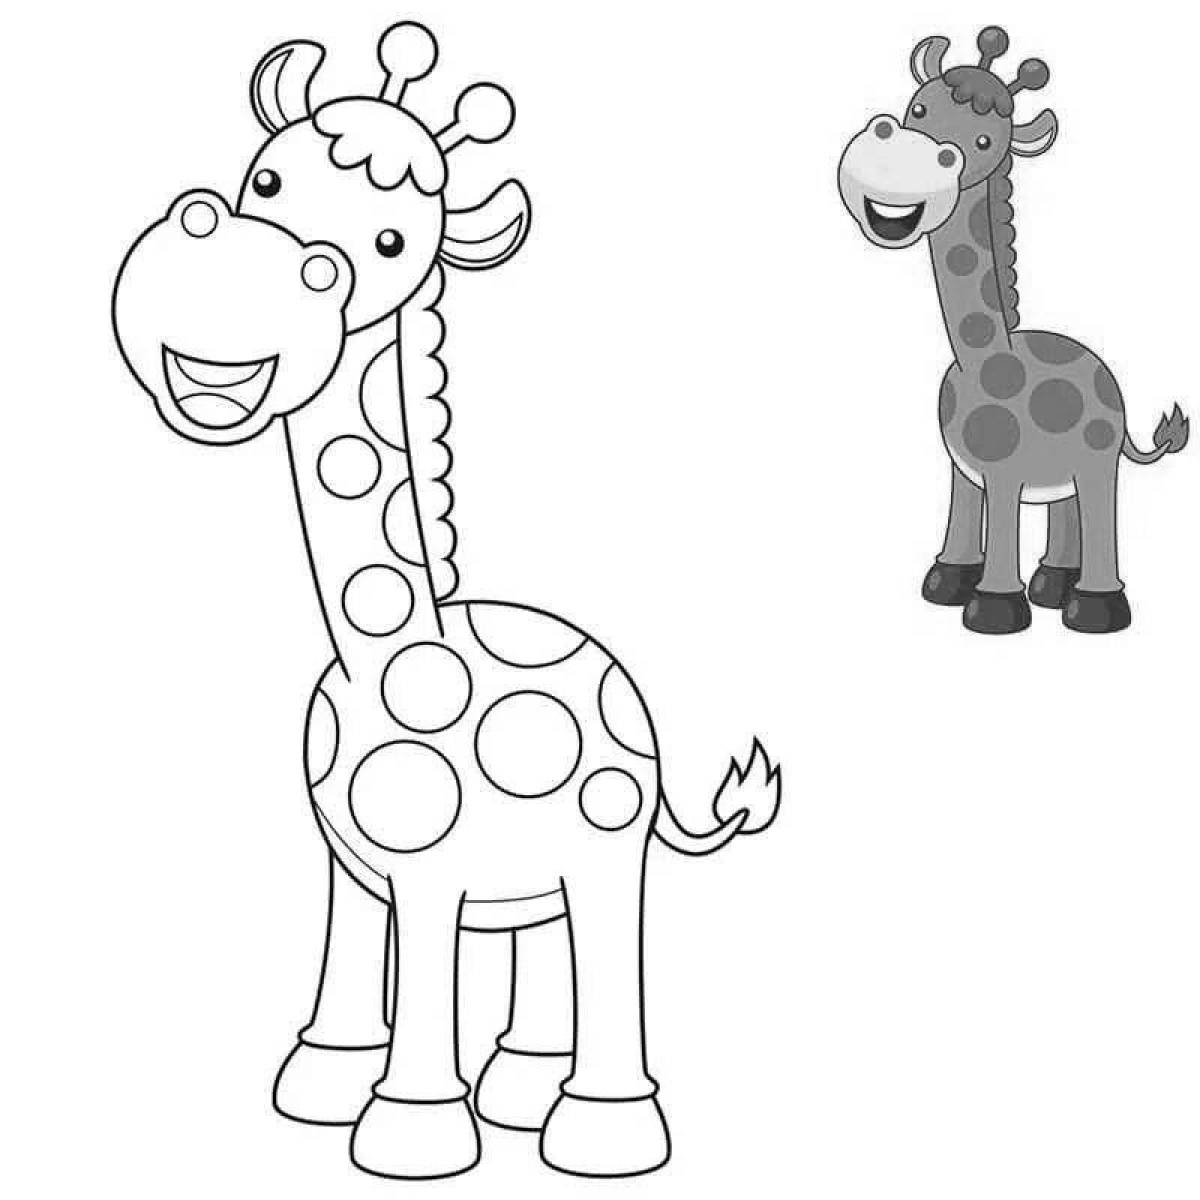 Coloring page happy giraffe